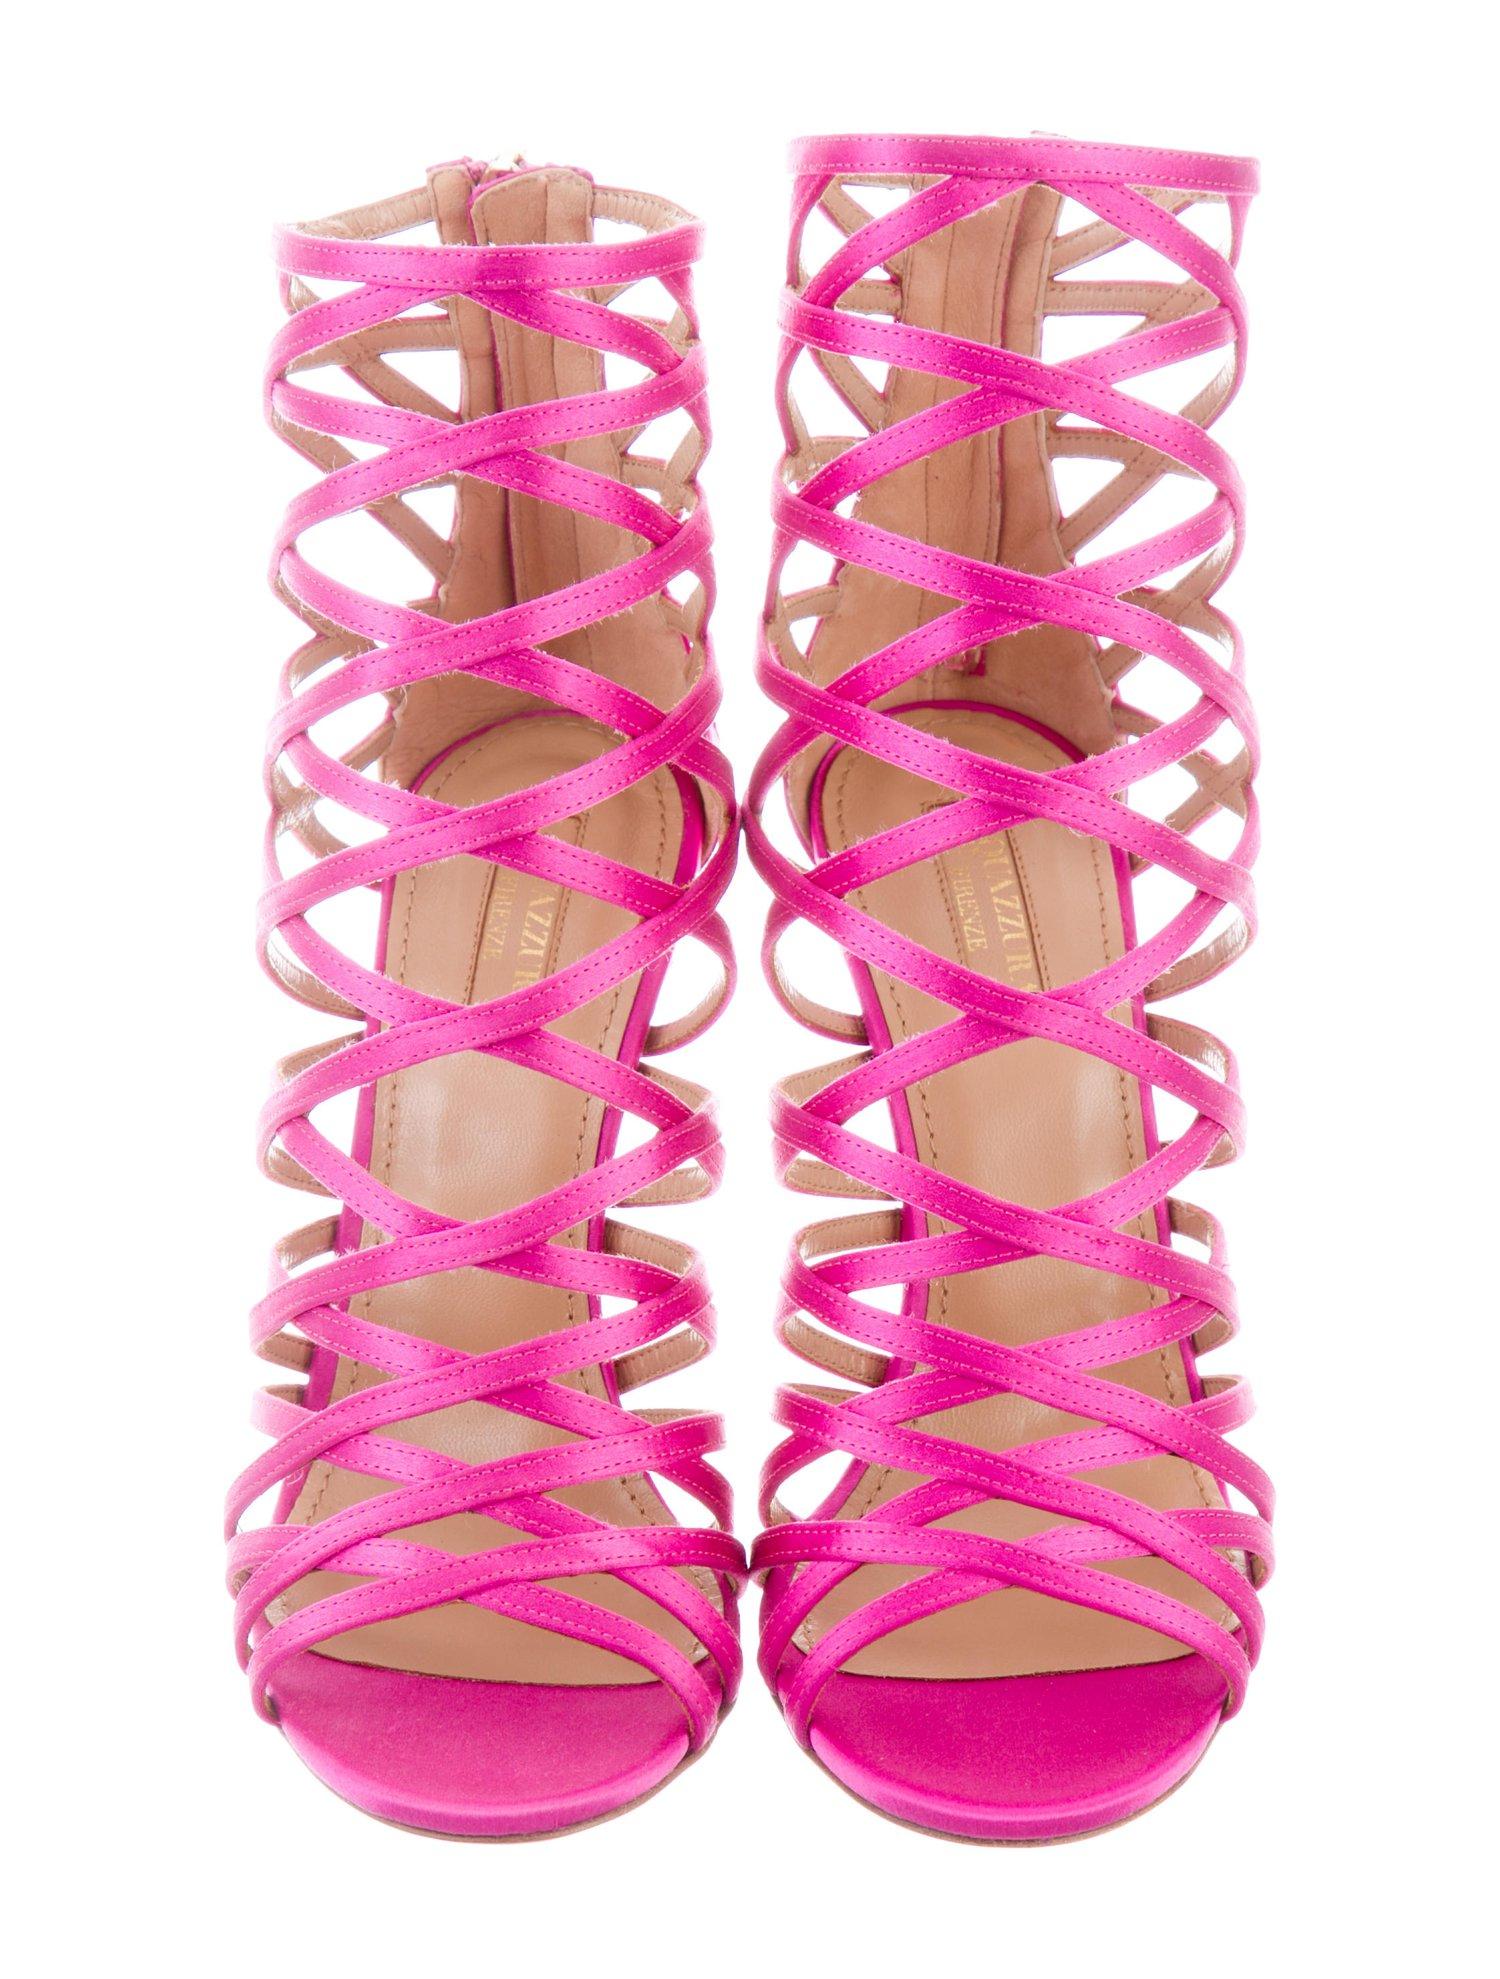 Aquazzura NEW Hot Pink Fuchsia Satin Cut Out Gladiator Evening Sandals Heels

Size IT 36.5
Satin
Gold tone hardware
Zipper closure
Made in Italy
Heel height 4.5